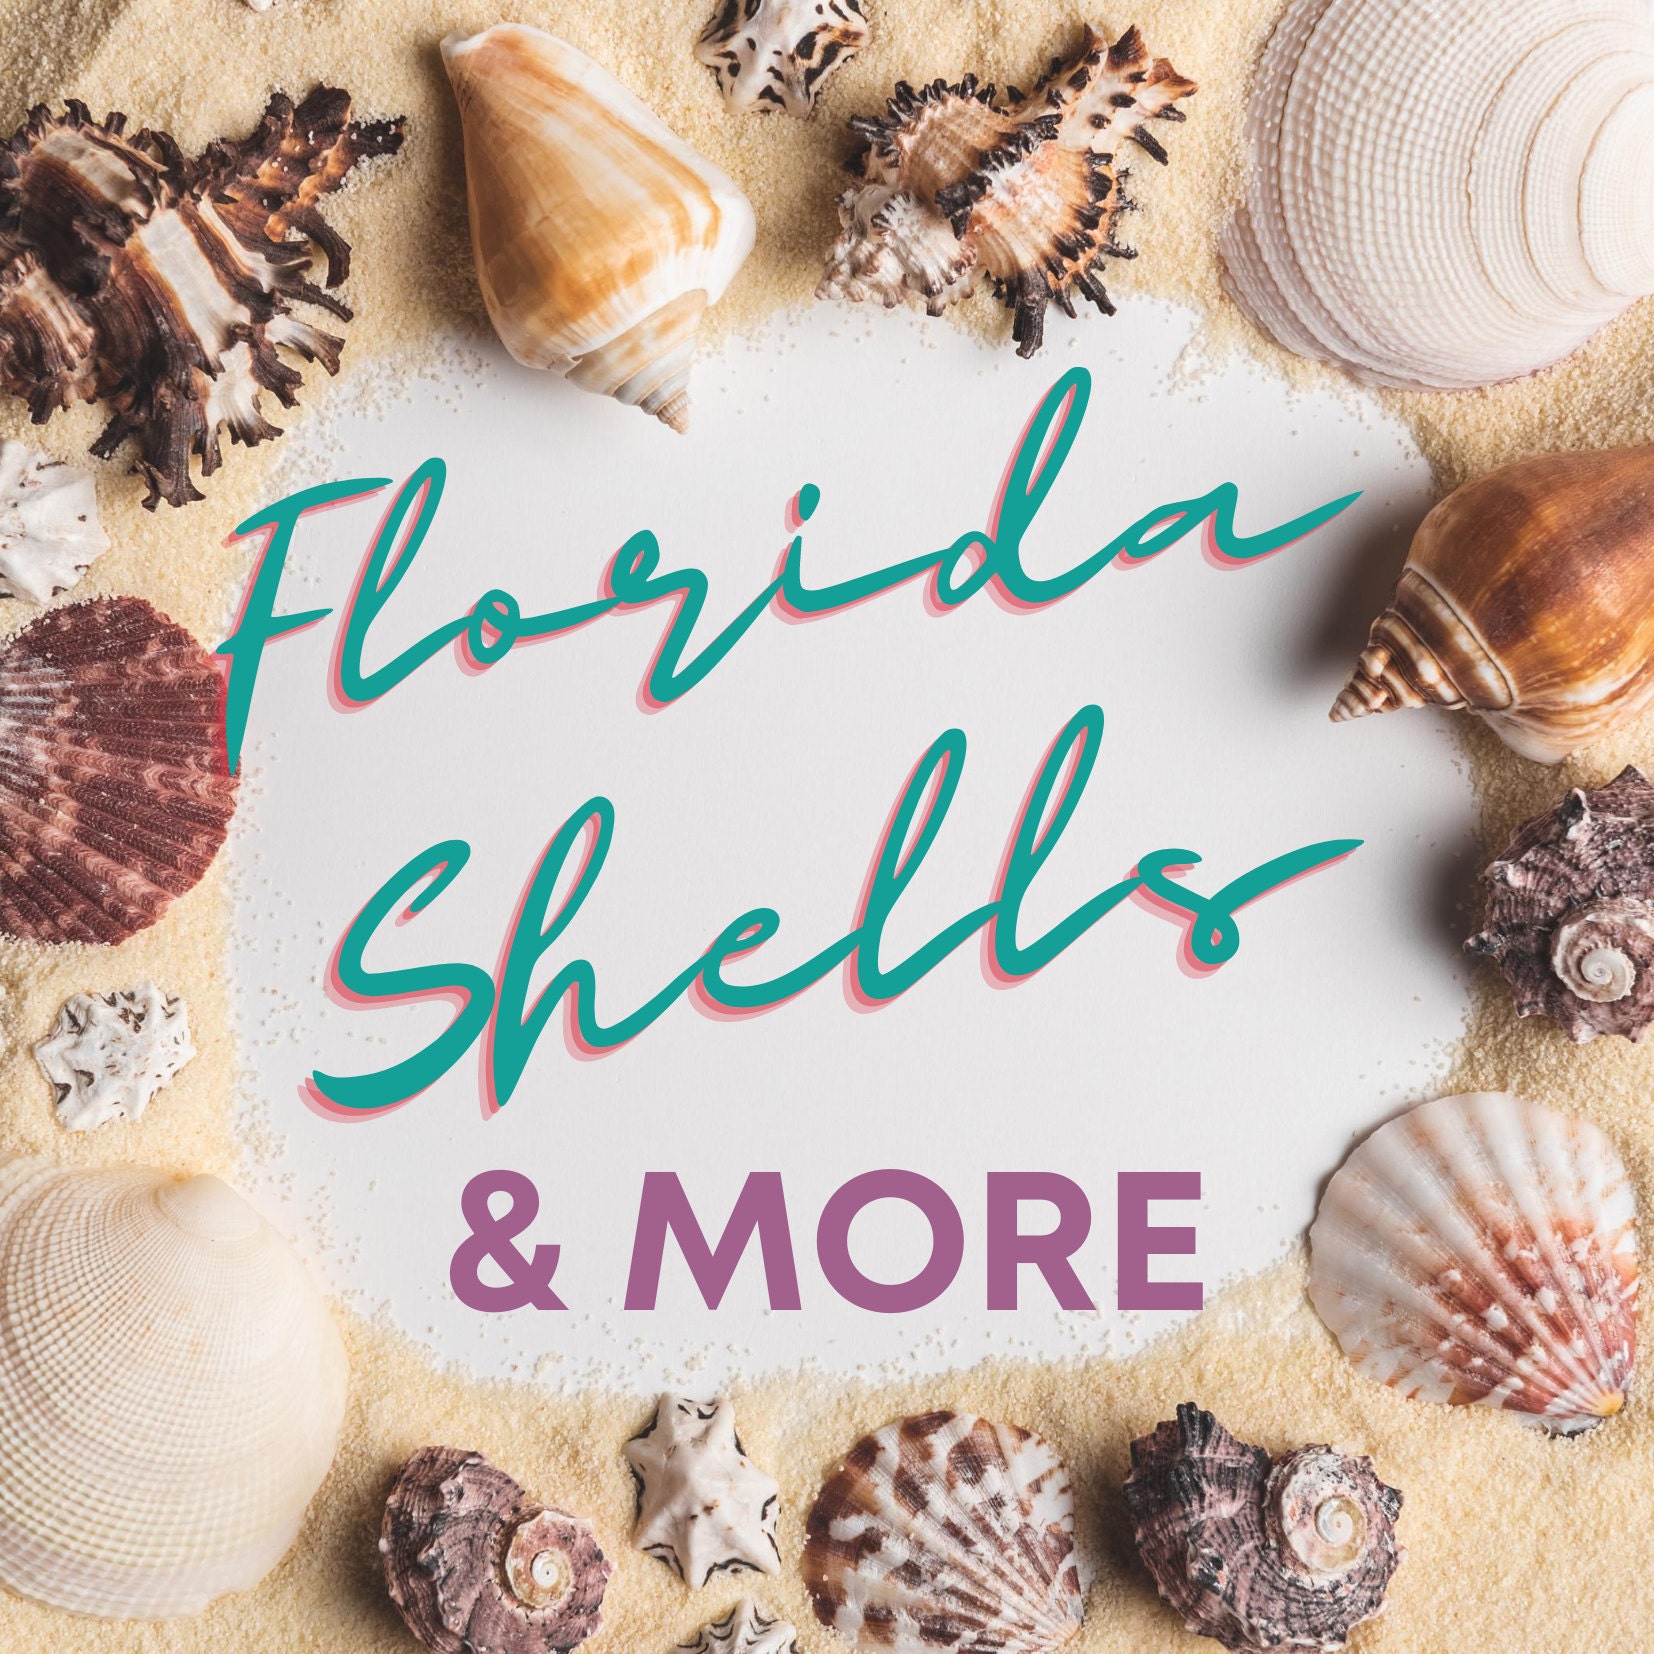 Capiz Shells Round 2 - Flat shells - Natural Cream Capiz - Beach Wedding  Favors - Crafts Supplies Crafting - Home Decor!